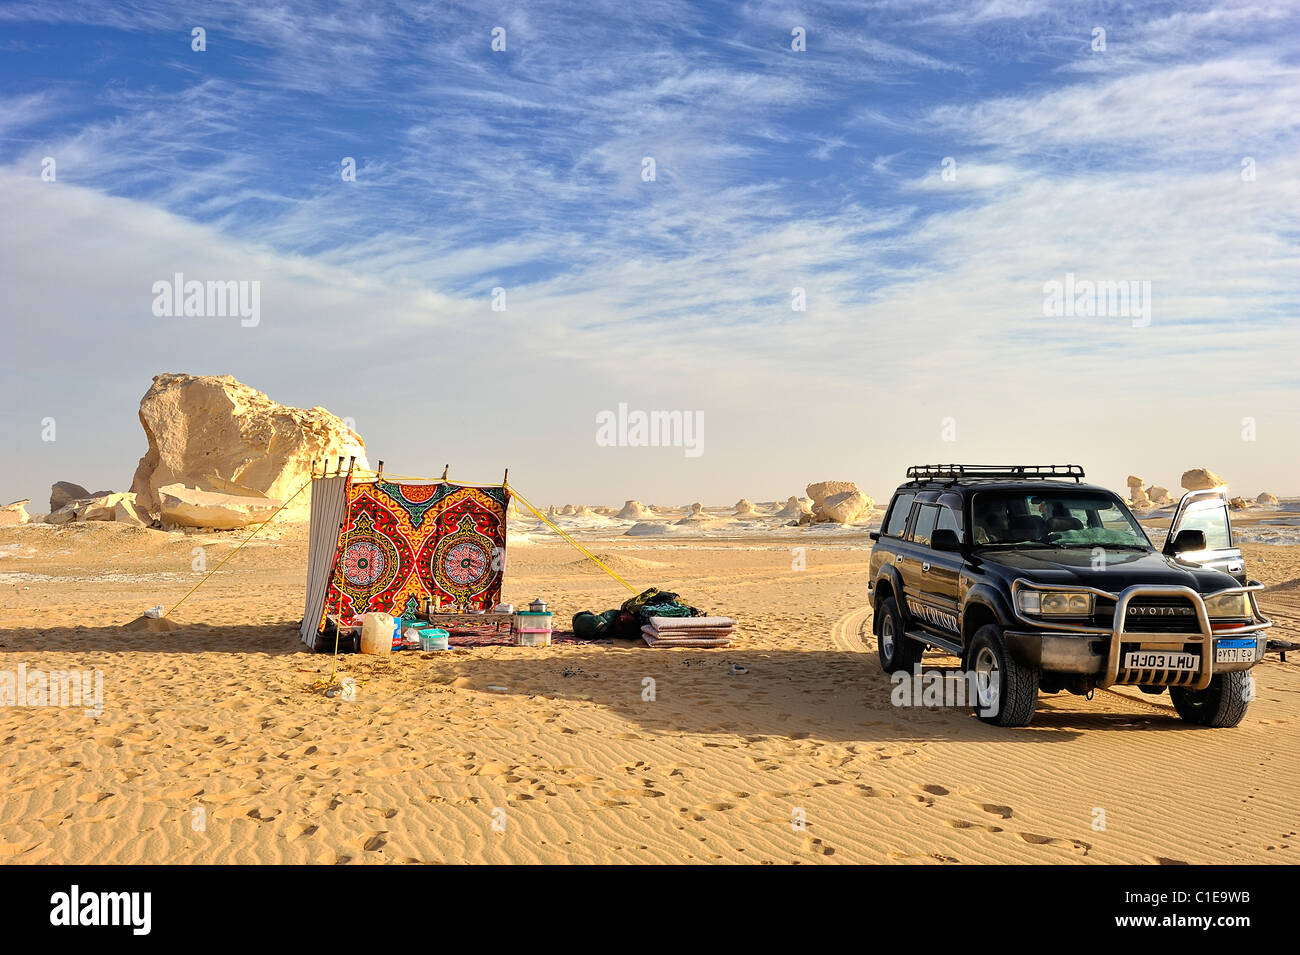 Tourist camp built for an overnight stay in the White Desert national park, Egypt Stock Photo